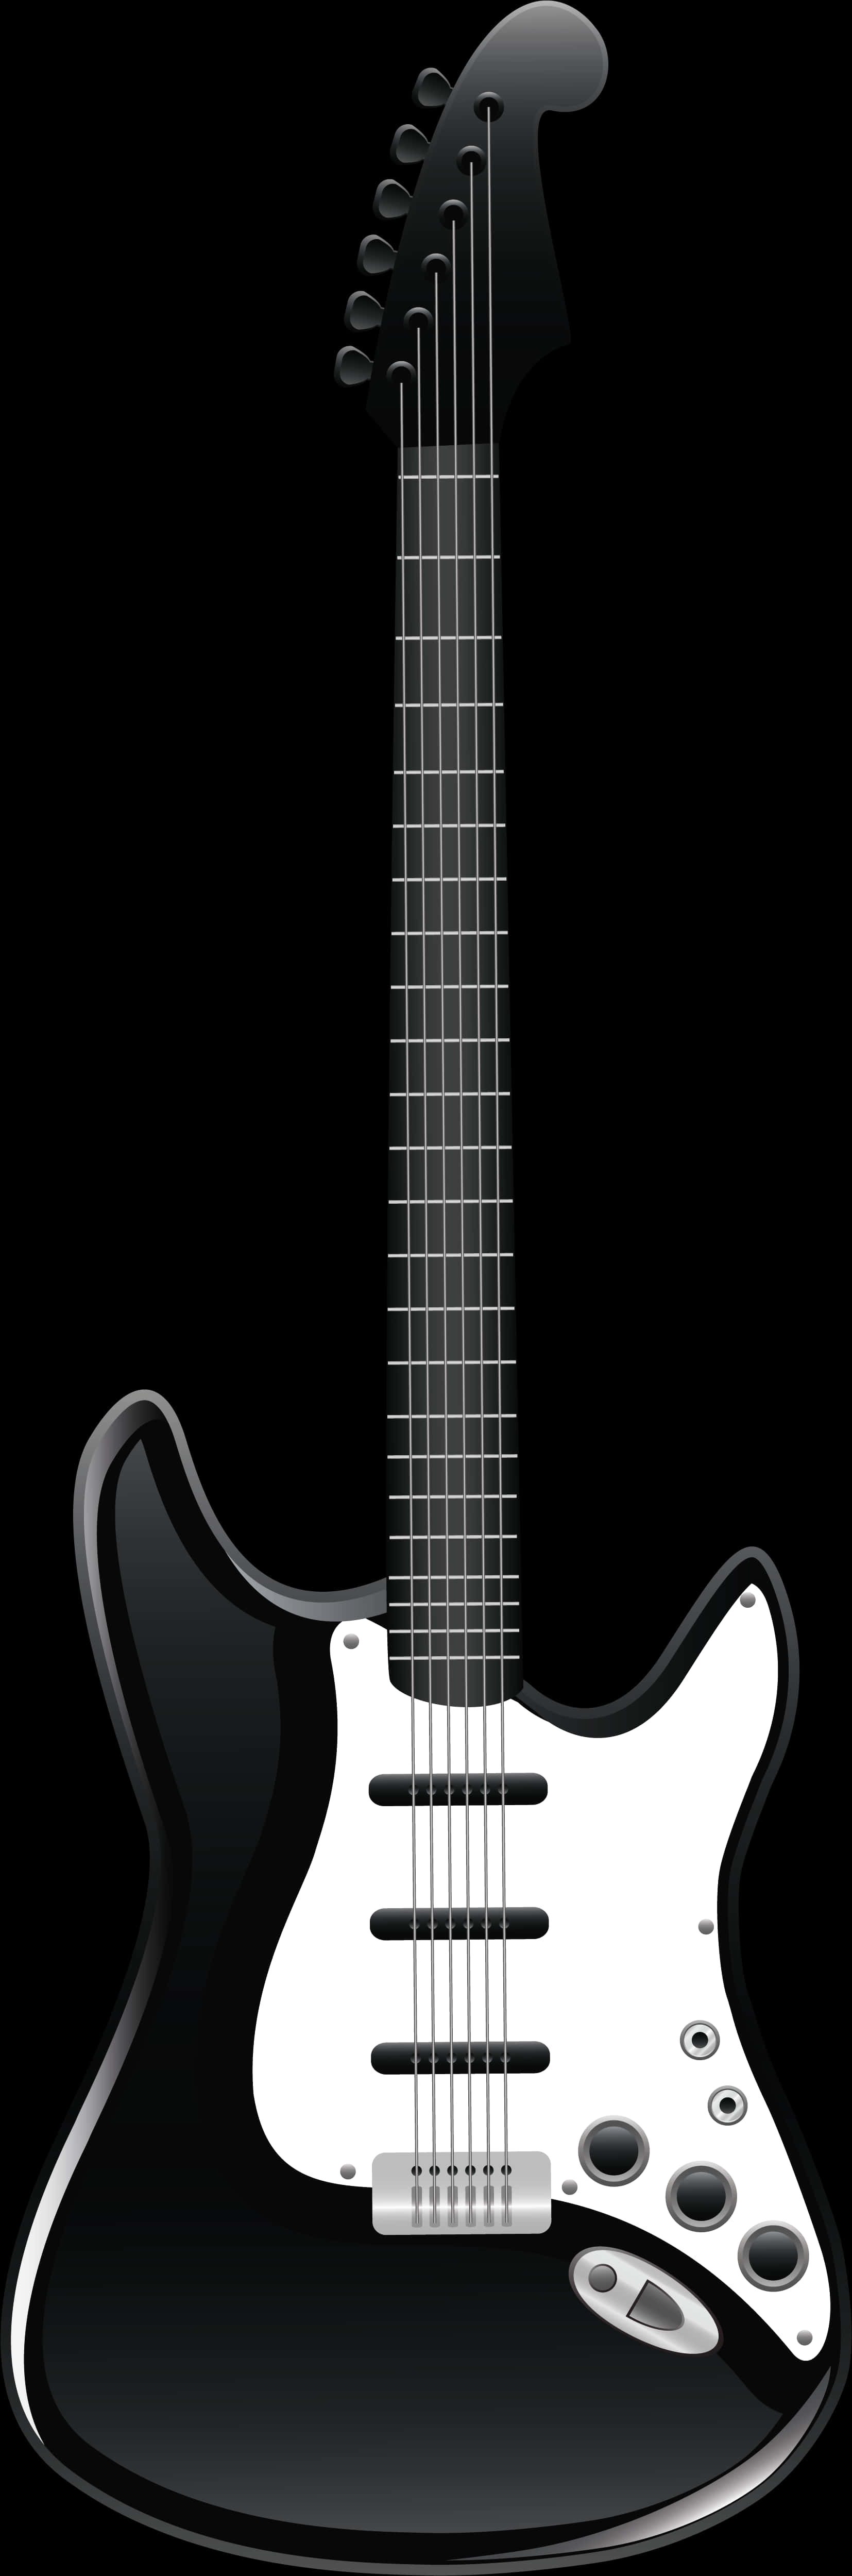 Black Electric Guitar Vector PNG